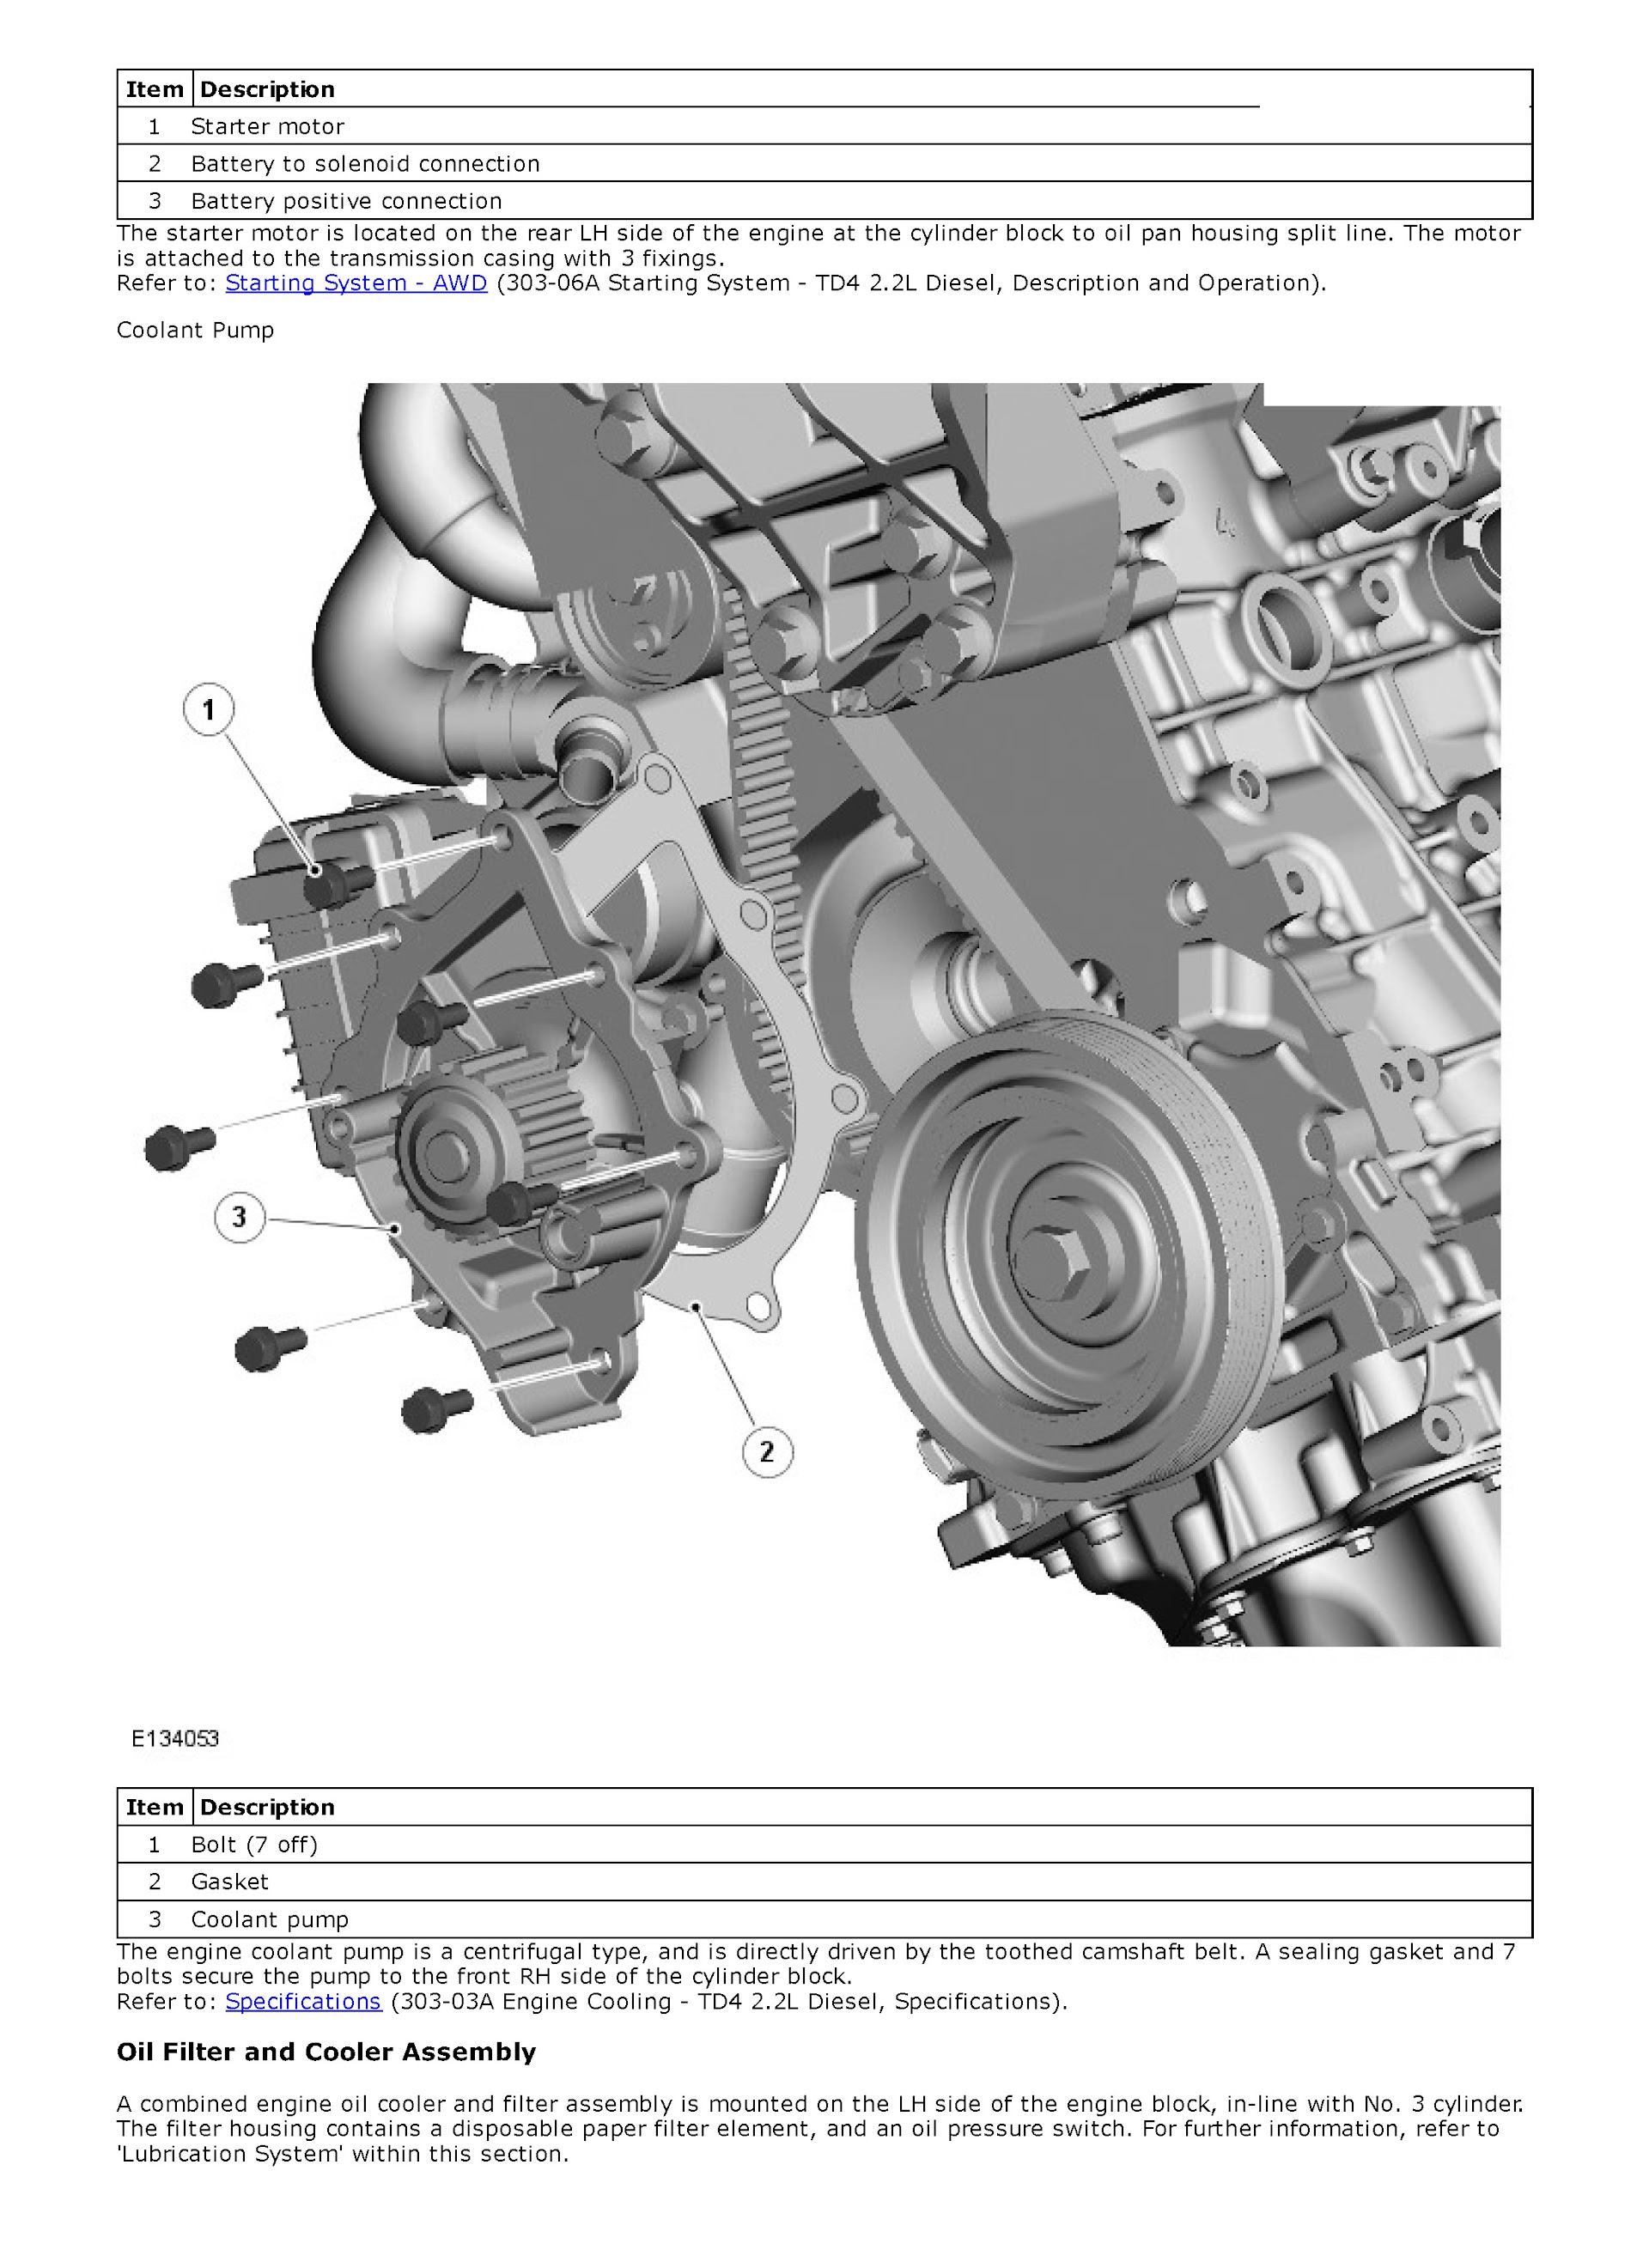 2014 Range Rover Evoque Repair Manual, Engine Mechanical